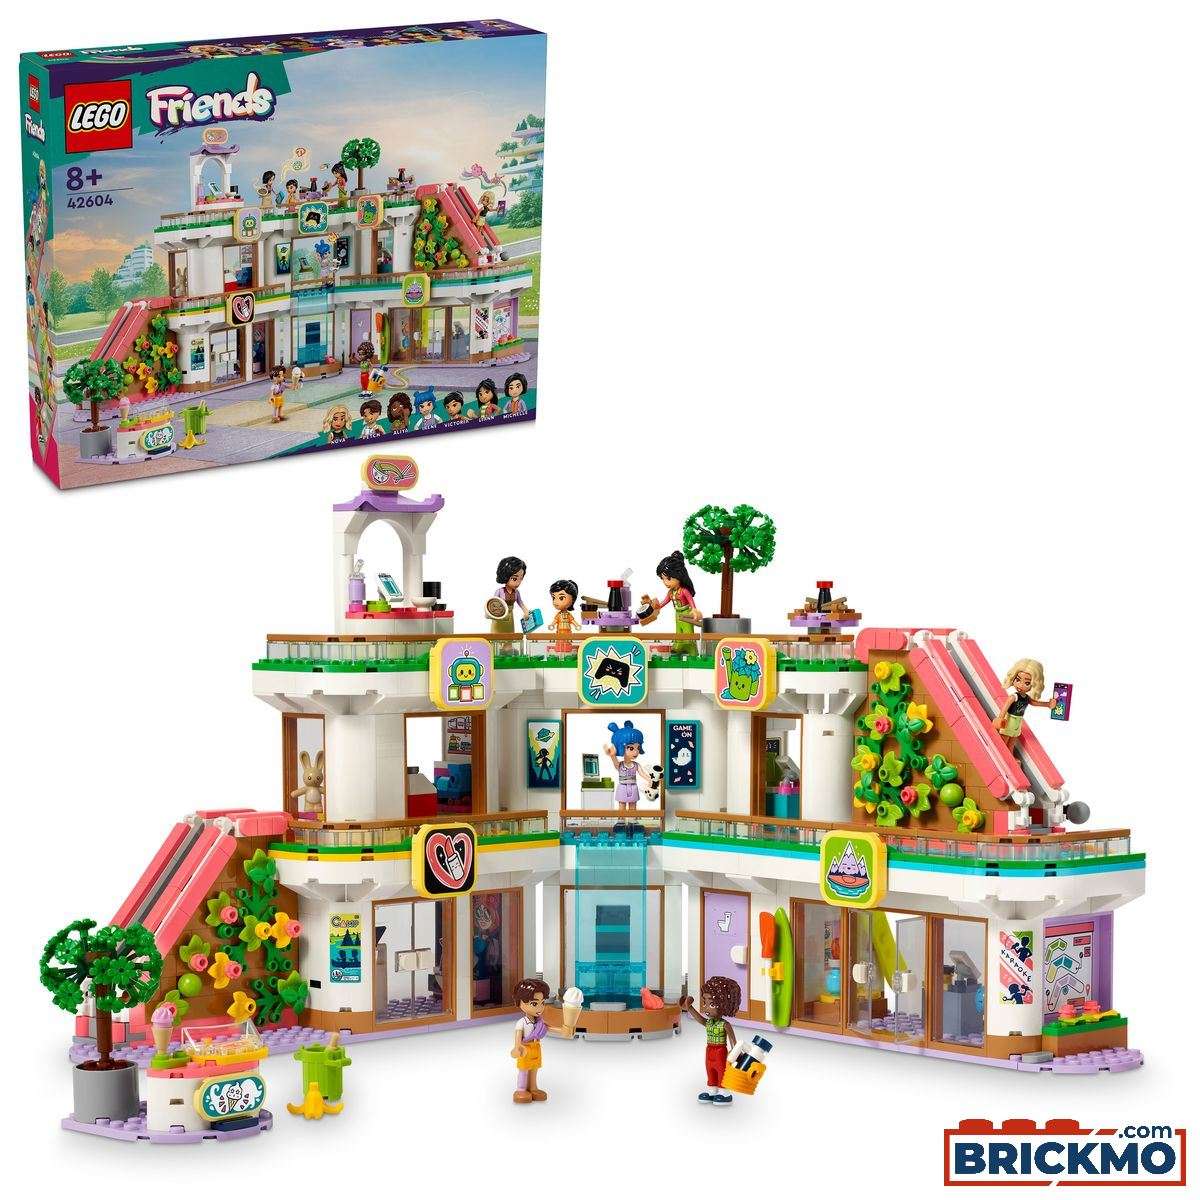 LEGO Friends 42604 Heartlake City butikscenter 42604